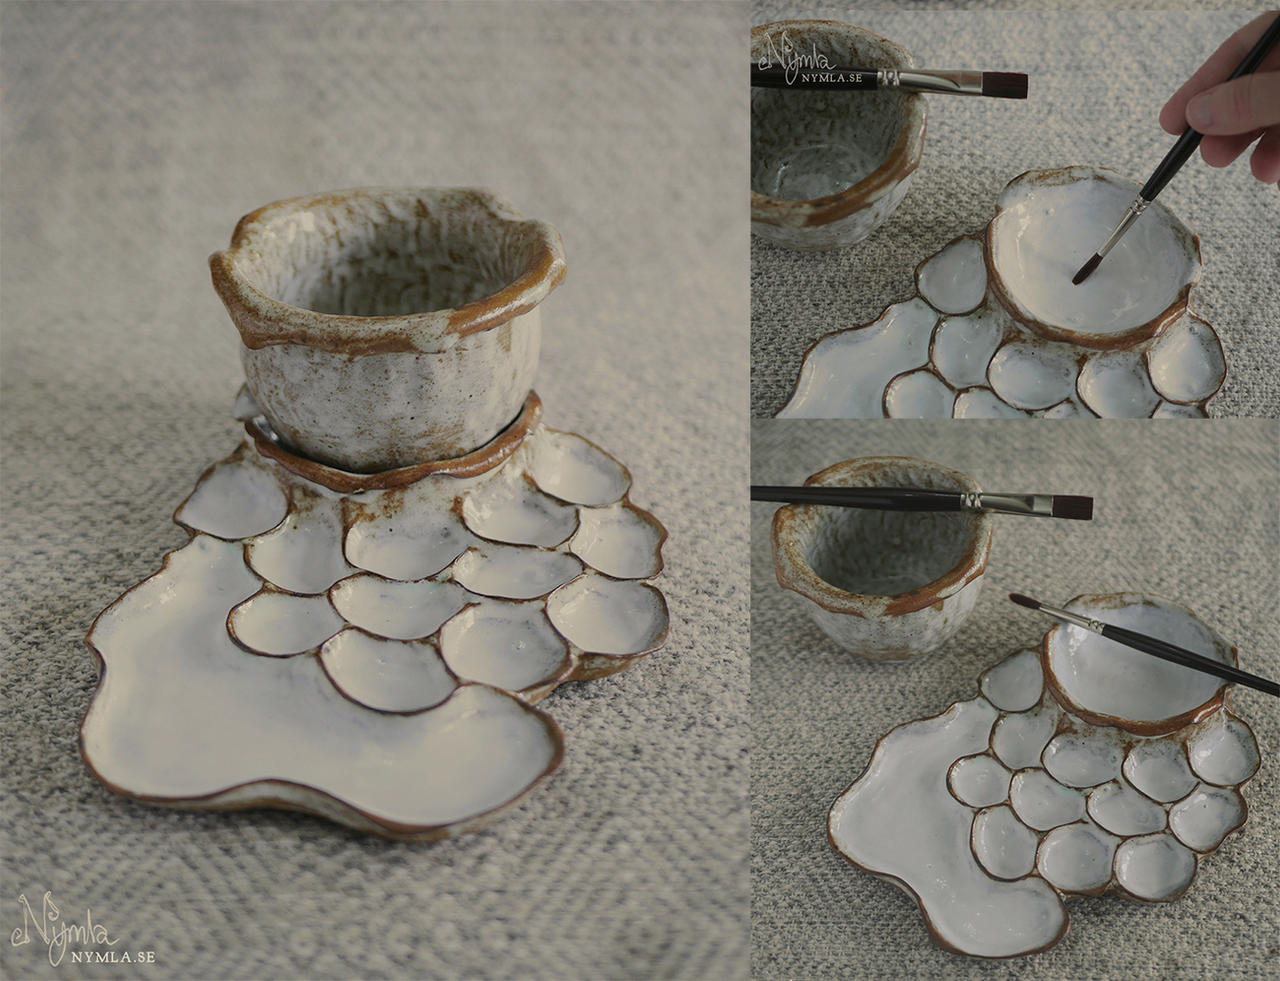 Ceramic Paint Palette w Cup by Nymla on DeviantArt